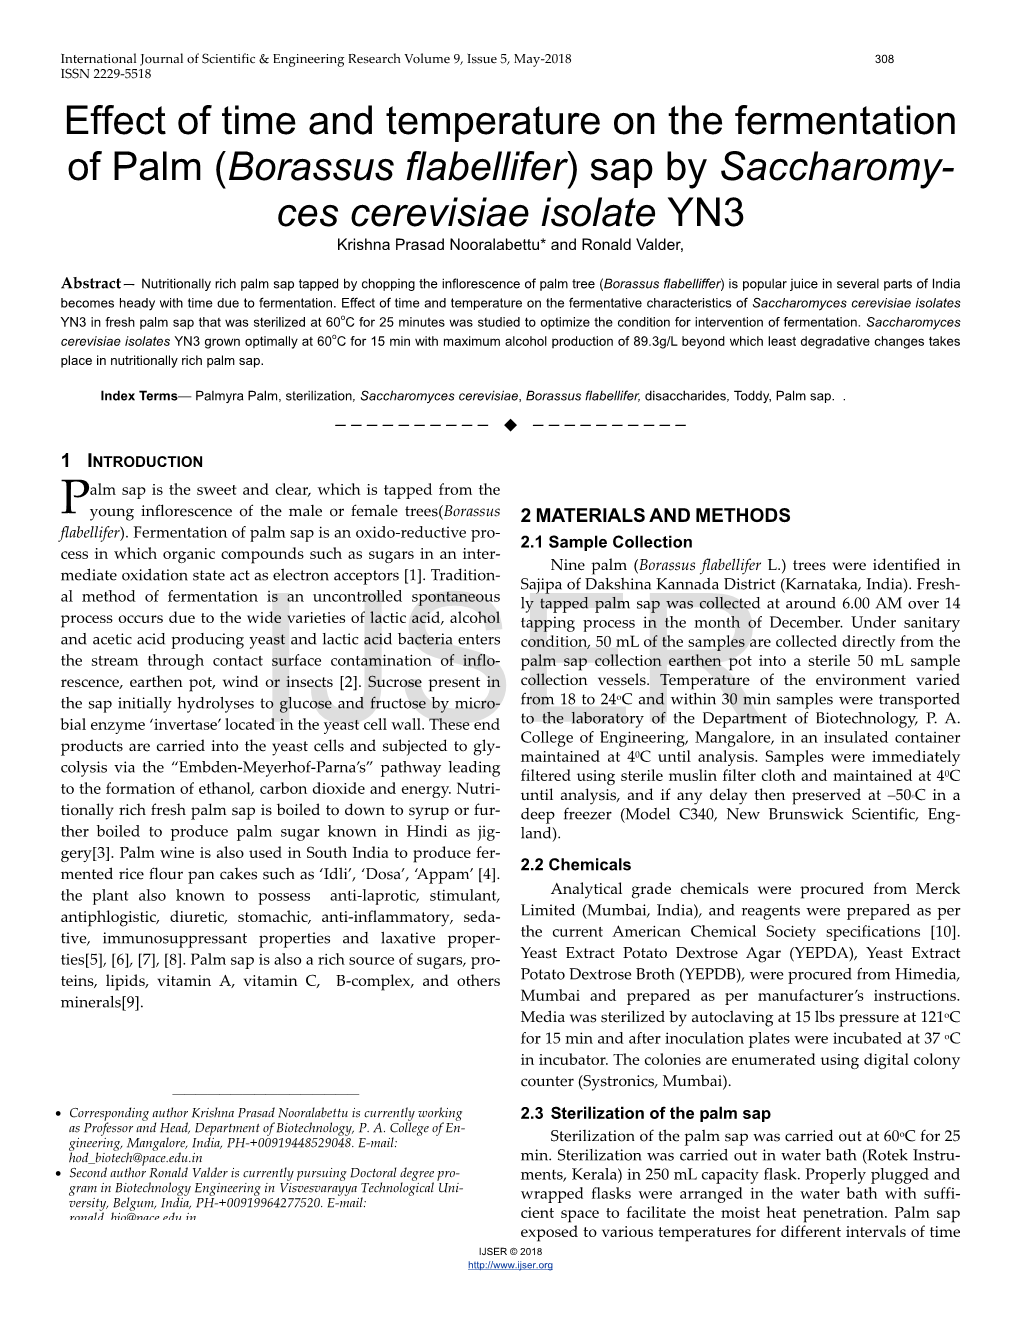 Borassus Flabellifer) Sap by Saccharomy- Ces Cerevisiae Isolate YN3 Krishna Prasad Nooralabettu* and Ronald Valder